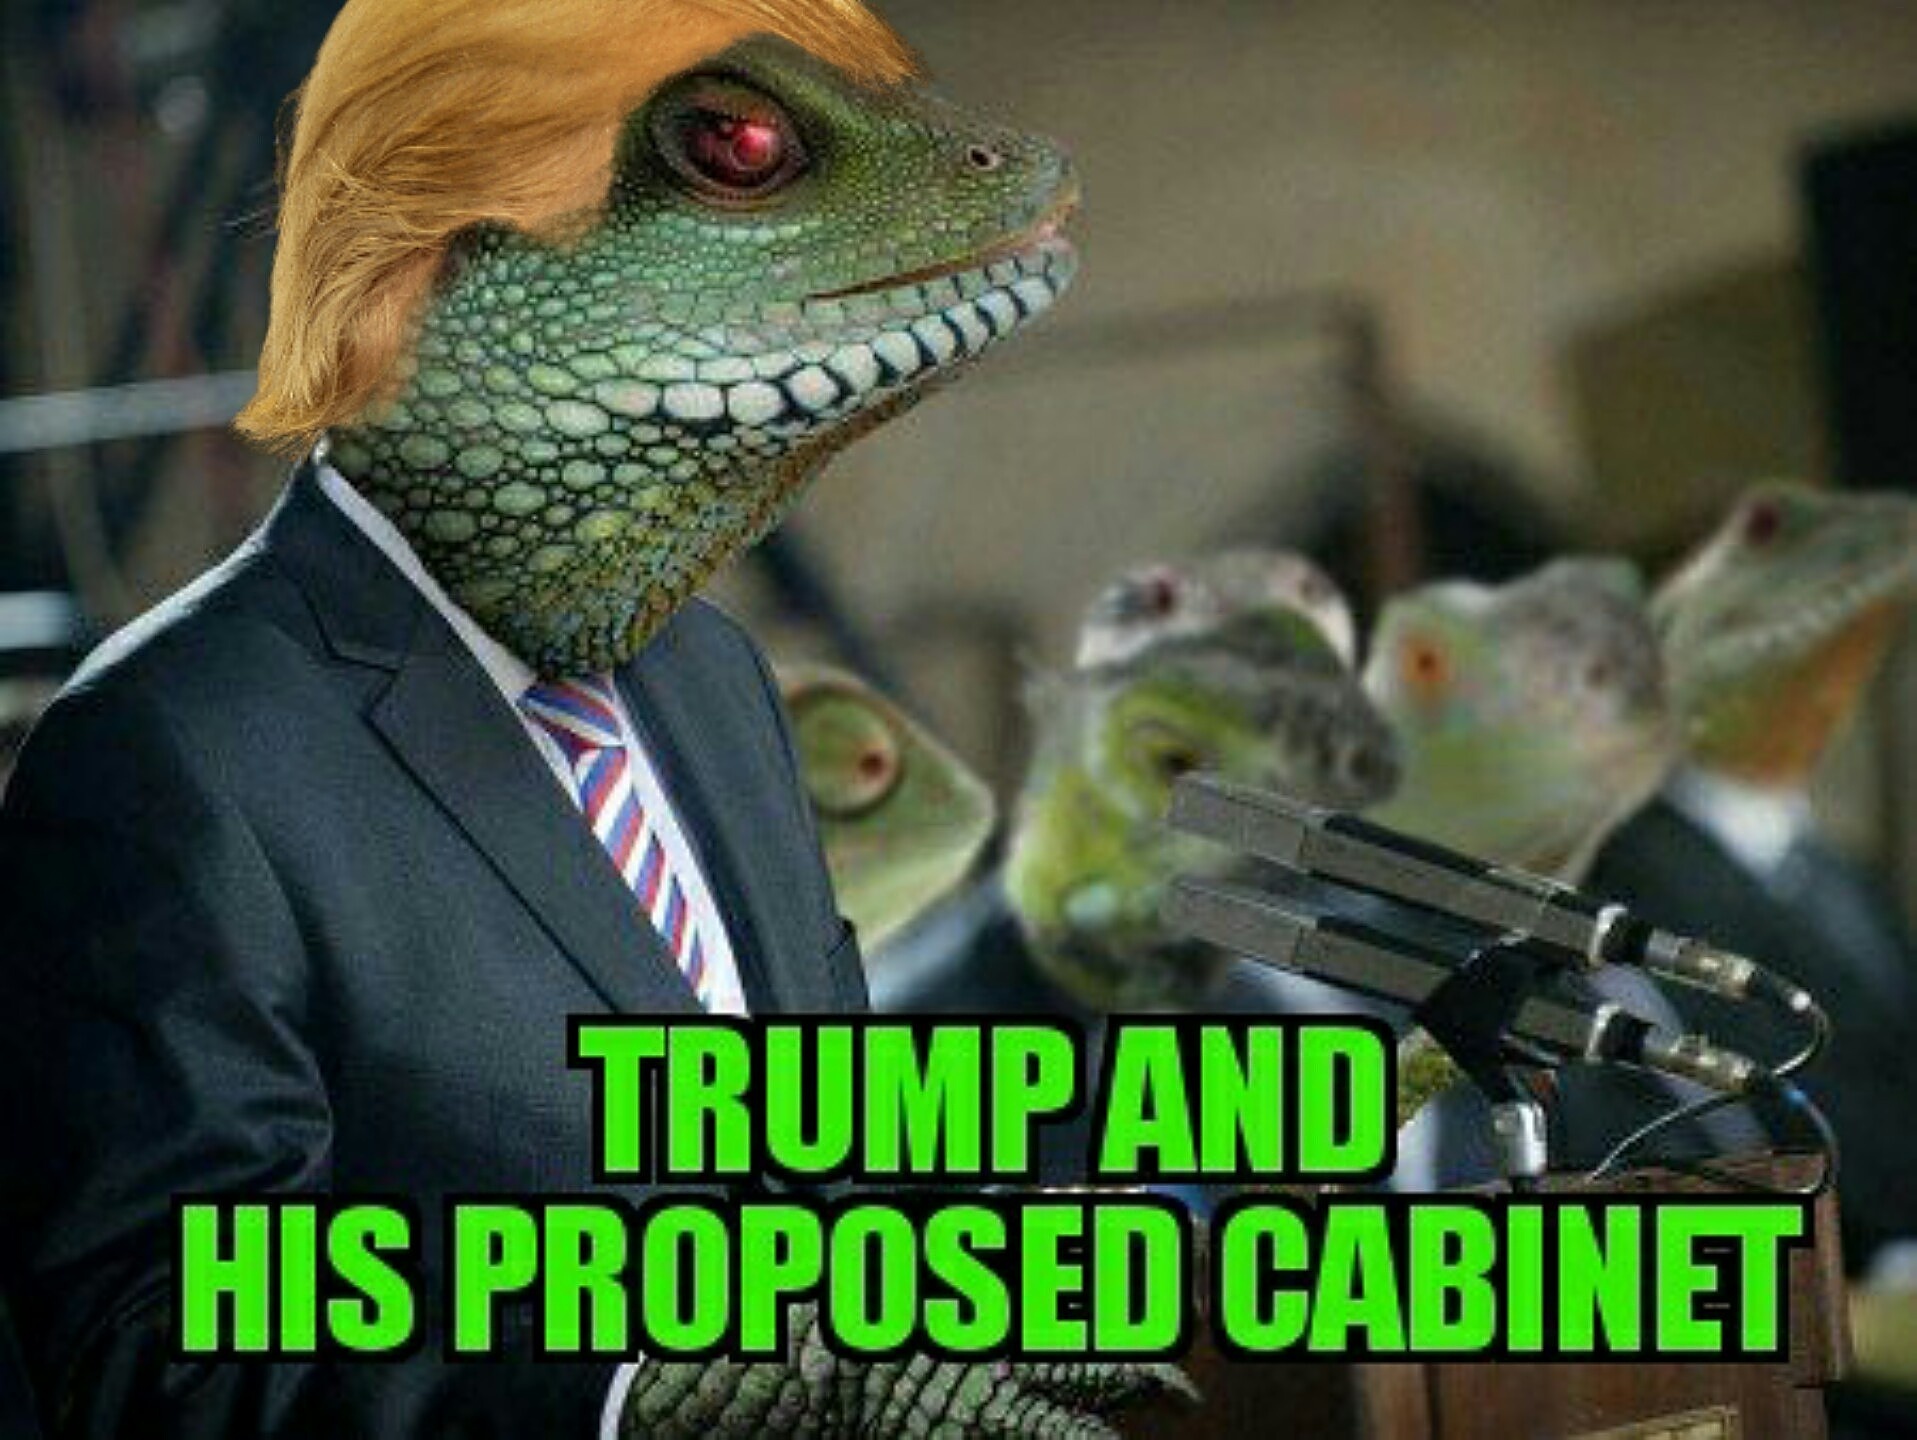 Evil space lizard trump Dump